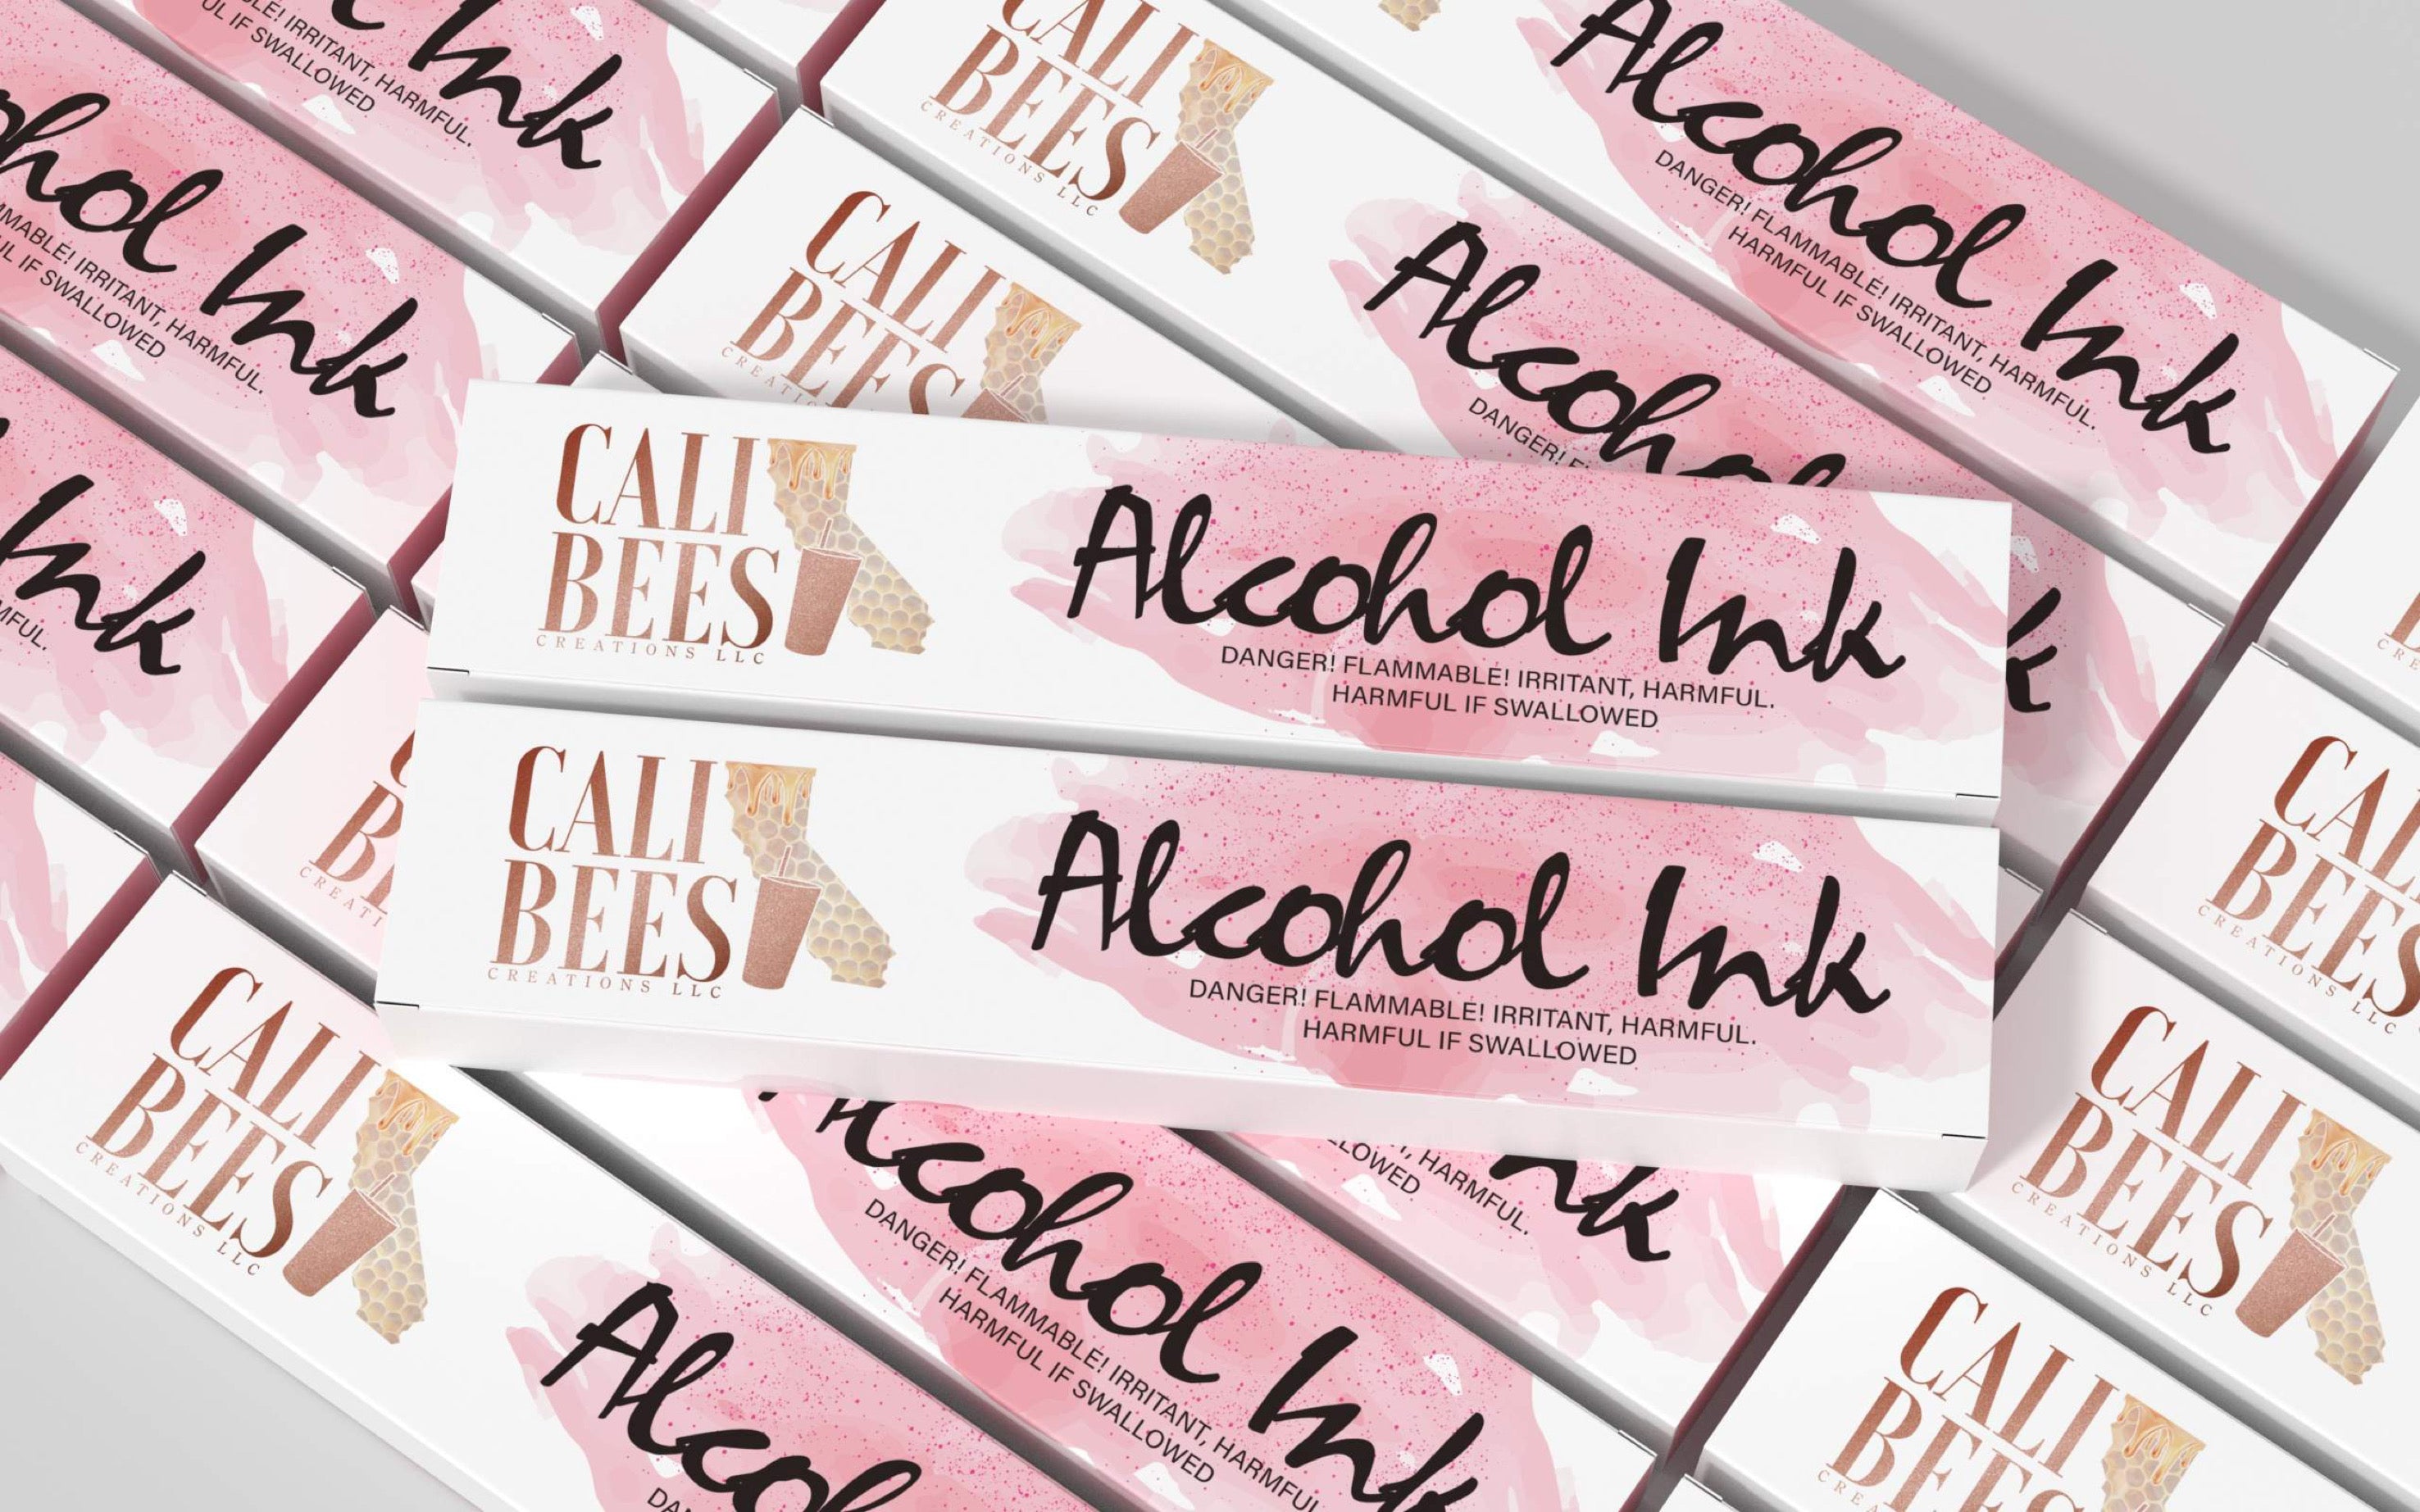 Cali Bees Alcohol Ink Set, 15 Piece Set – Cali Bees Creations